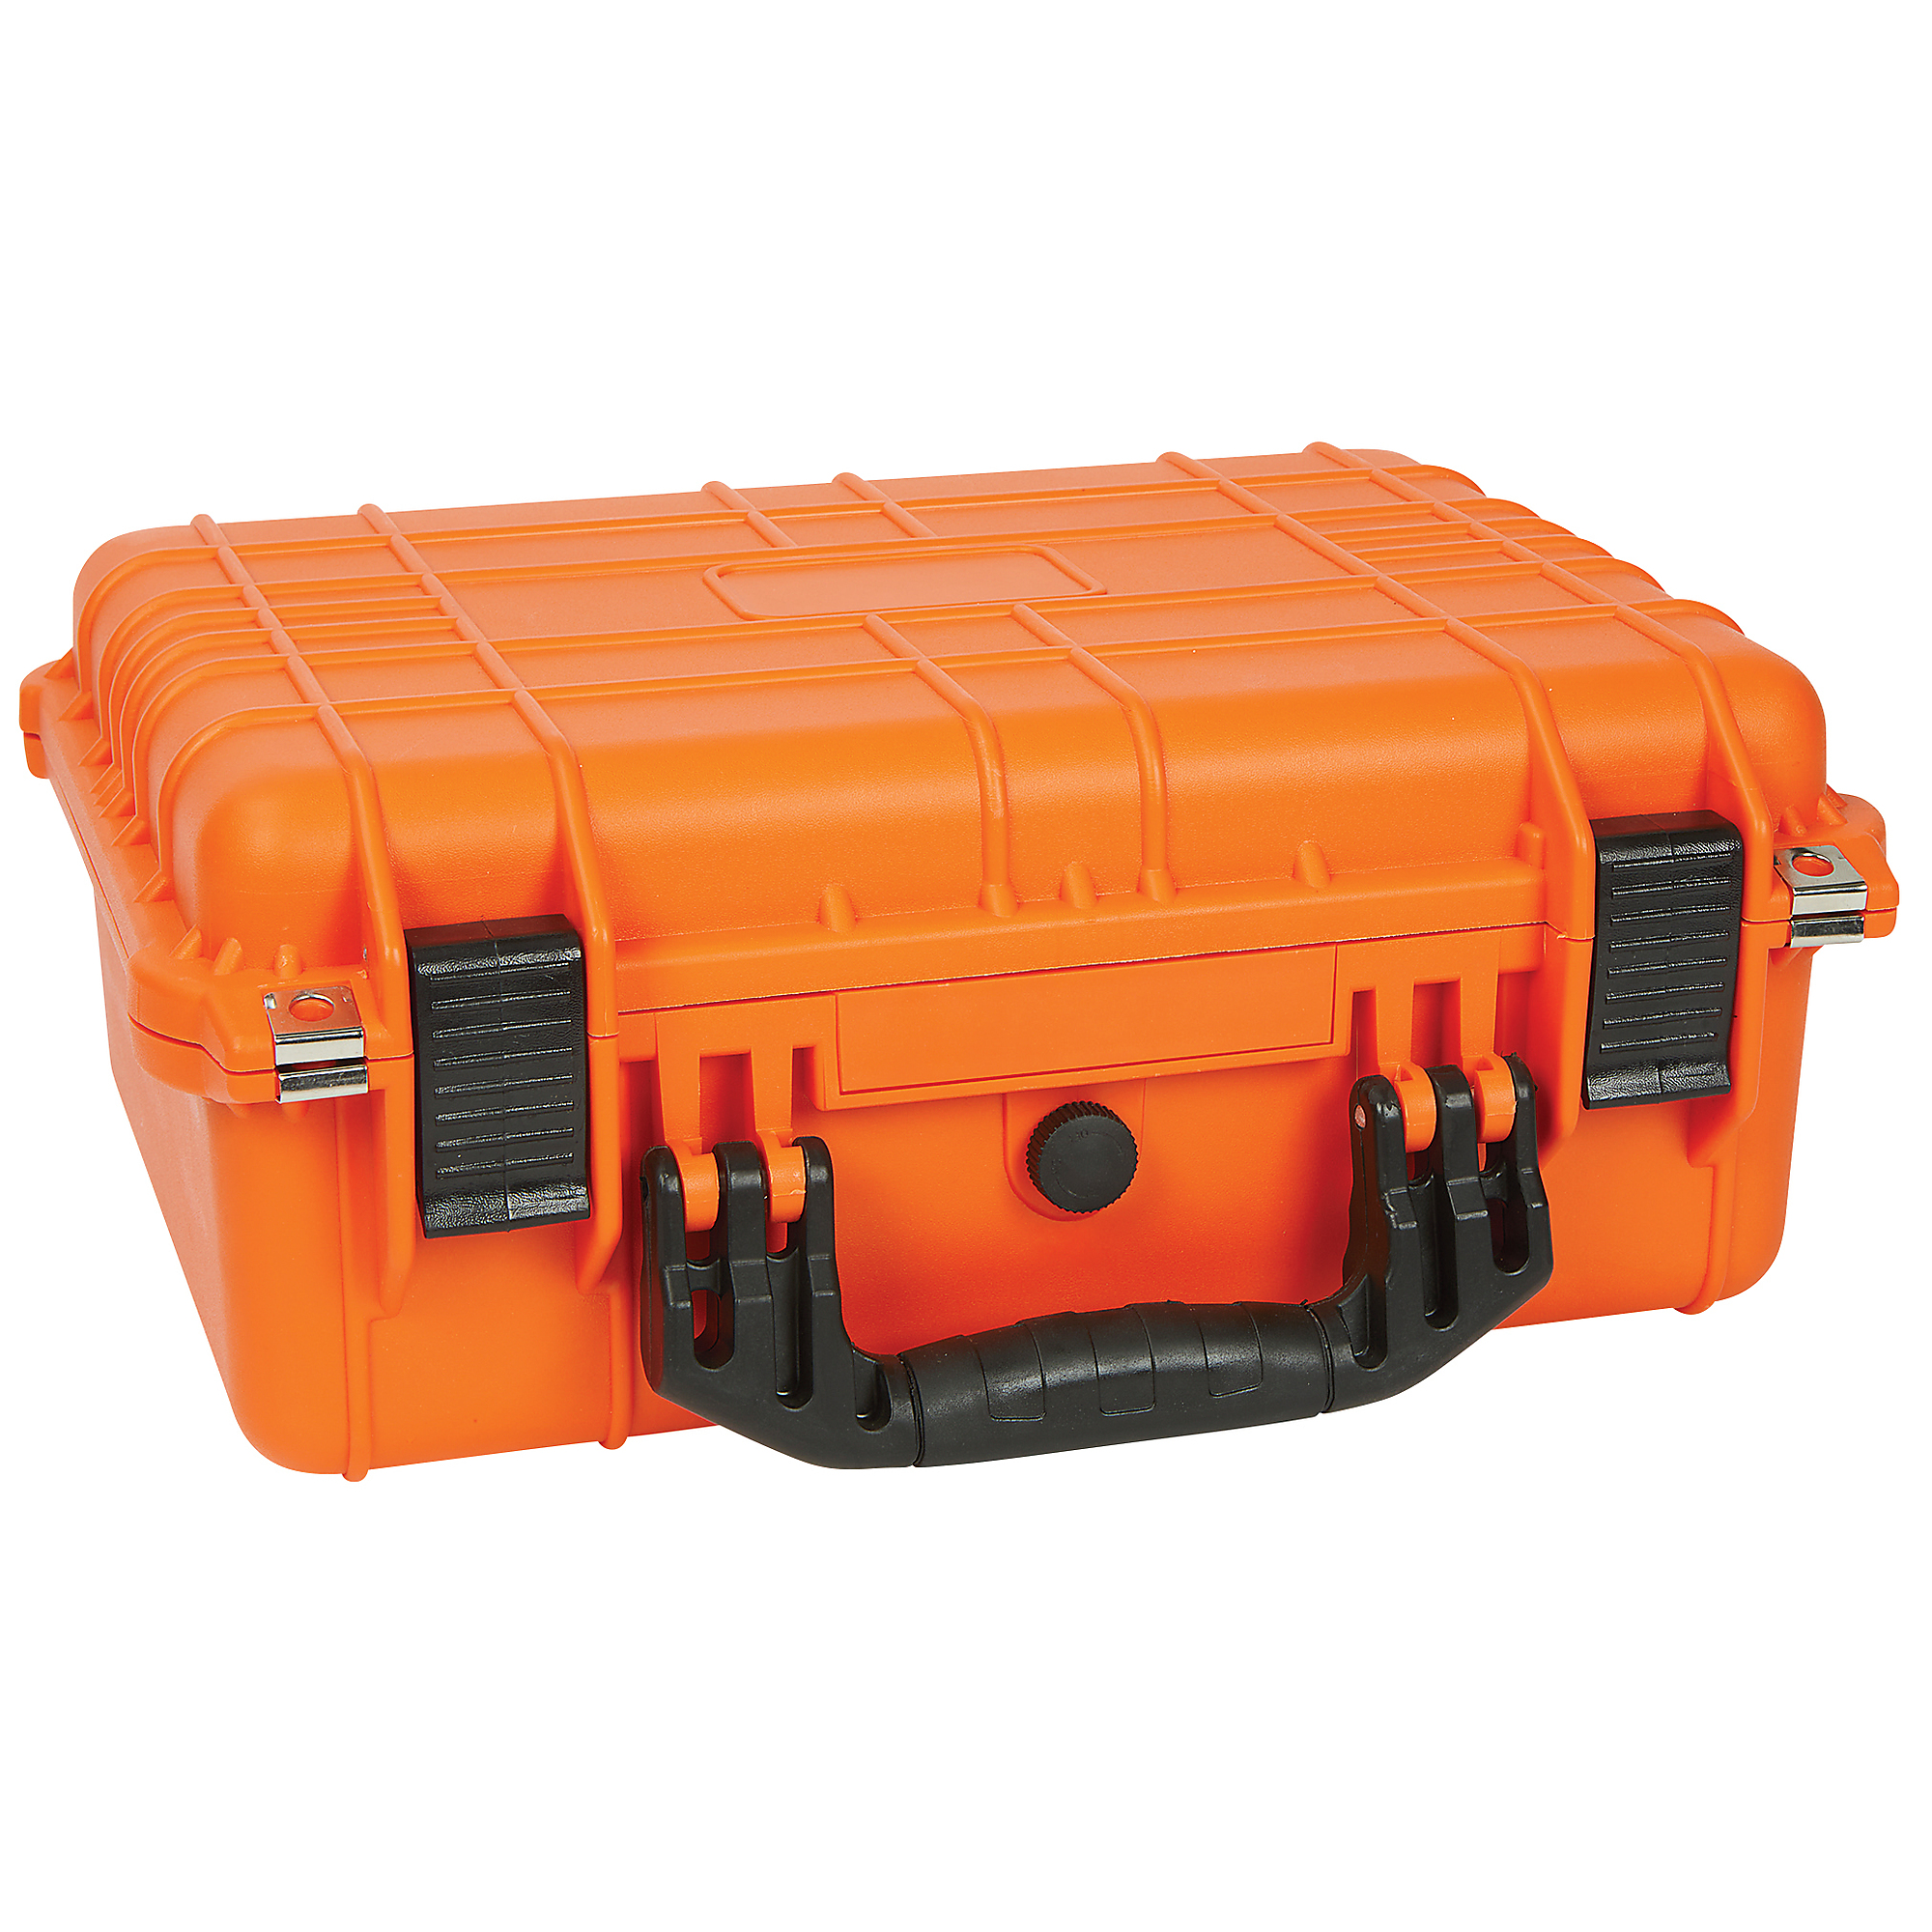 Strongway 16in. Plastic Waterproof Storage Case, Orange, Model# MJ